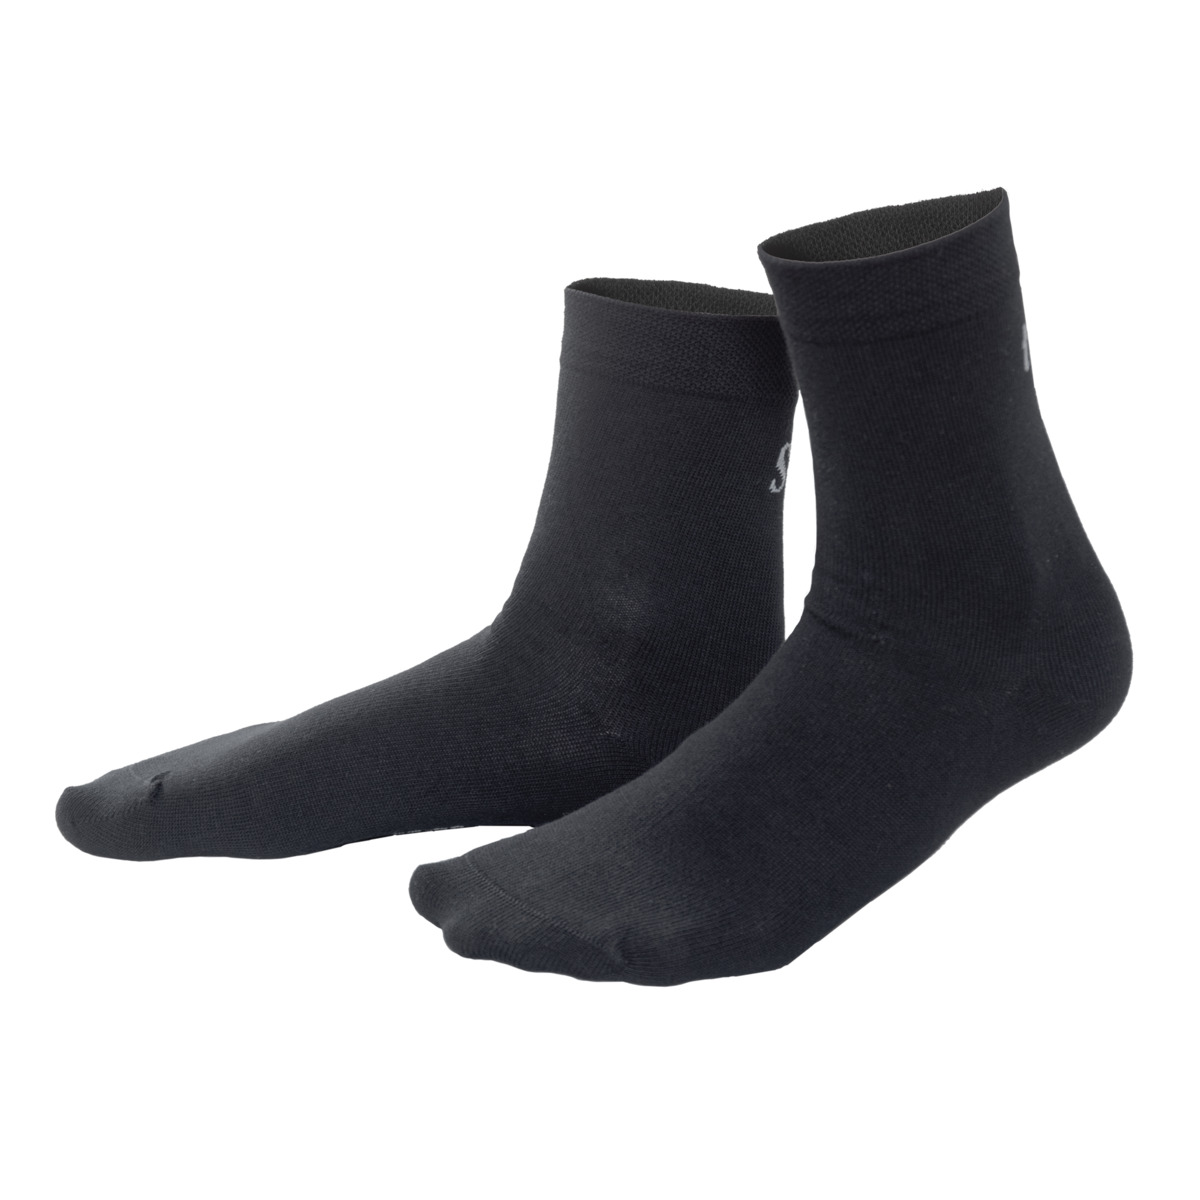 Black Socks, AIRI
